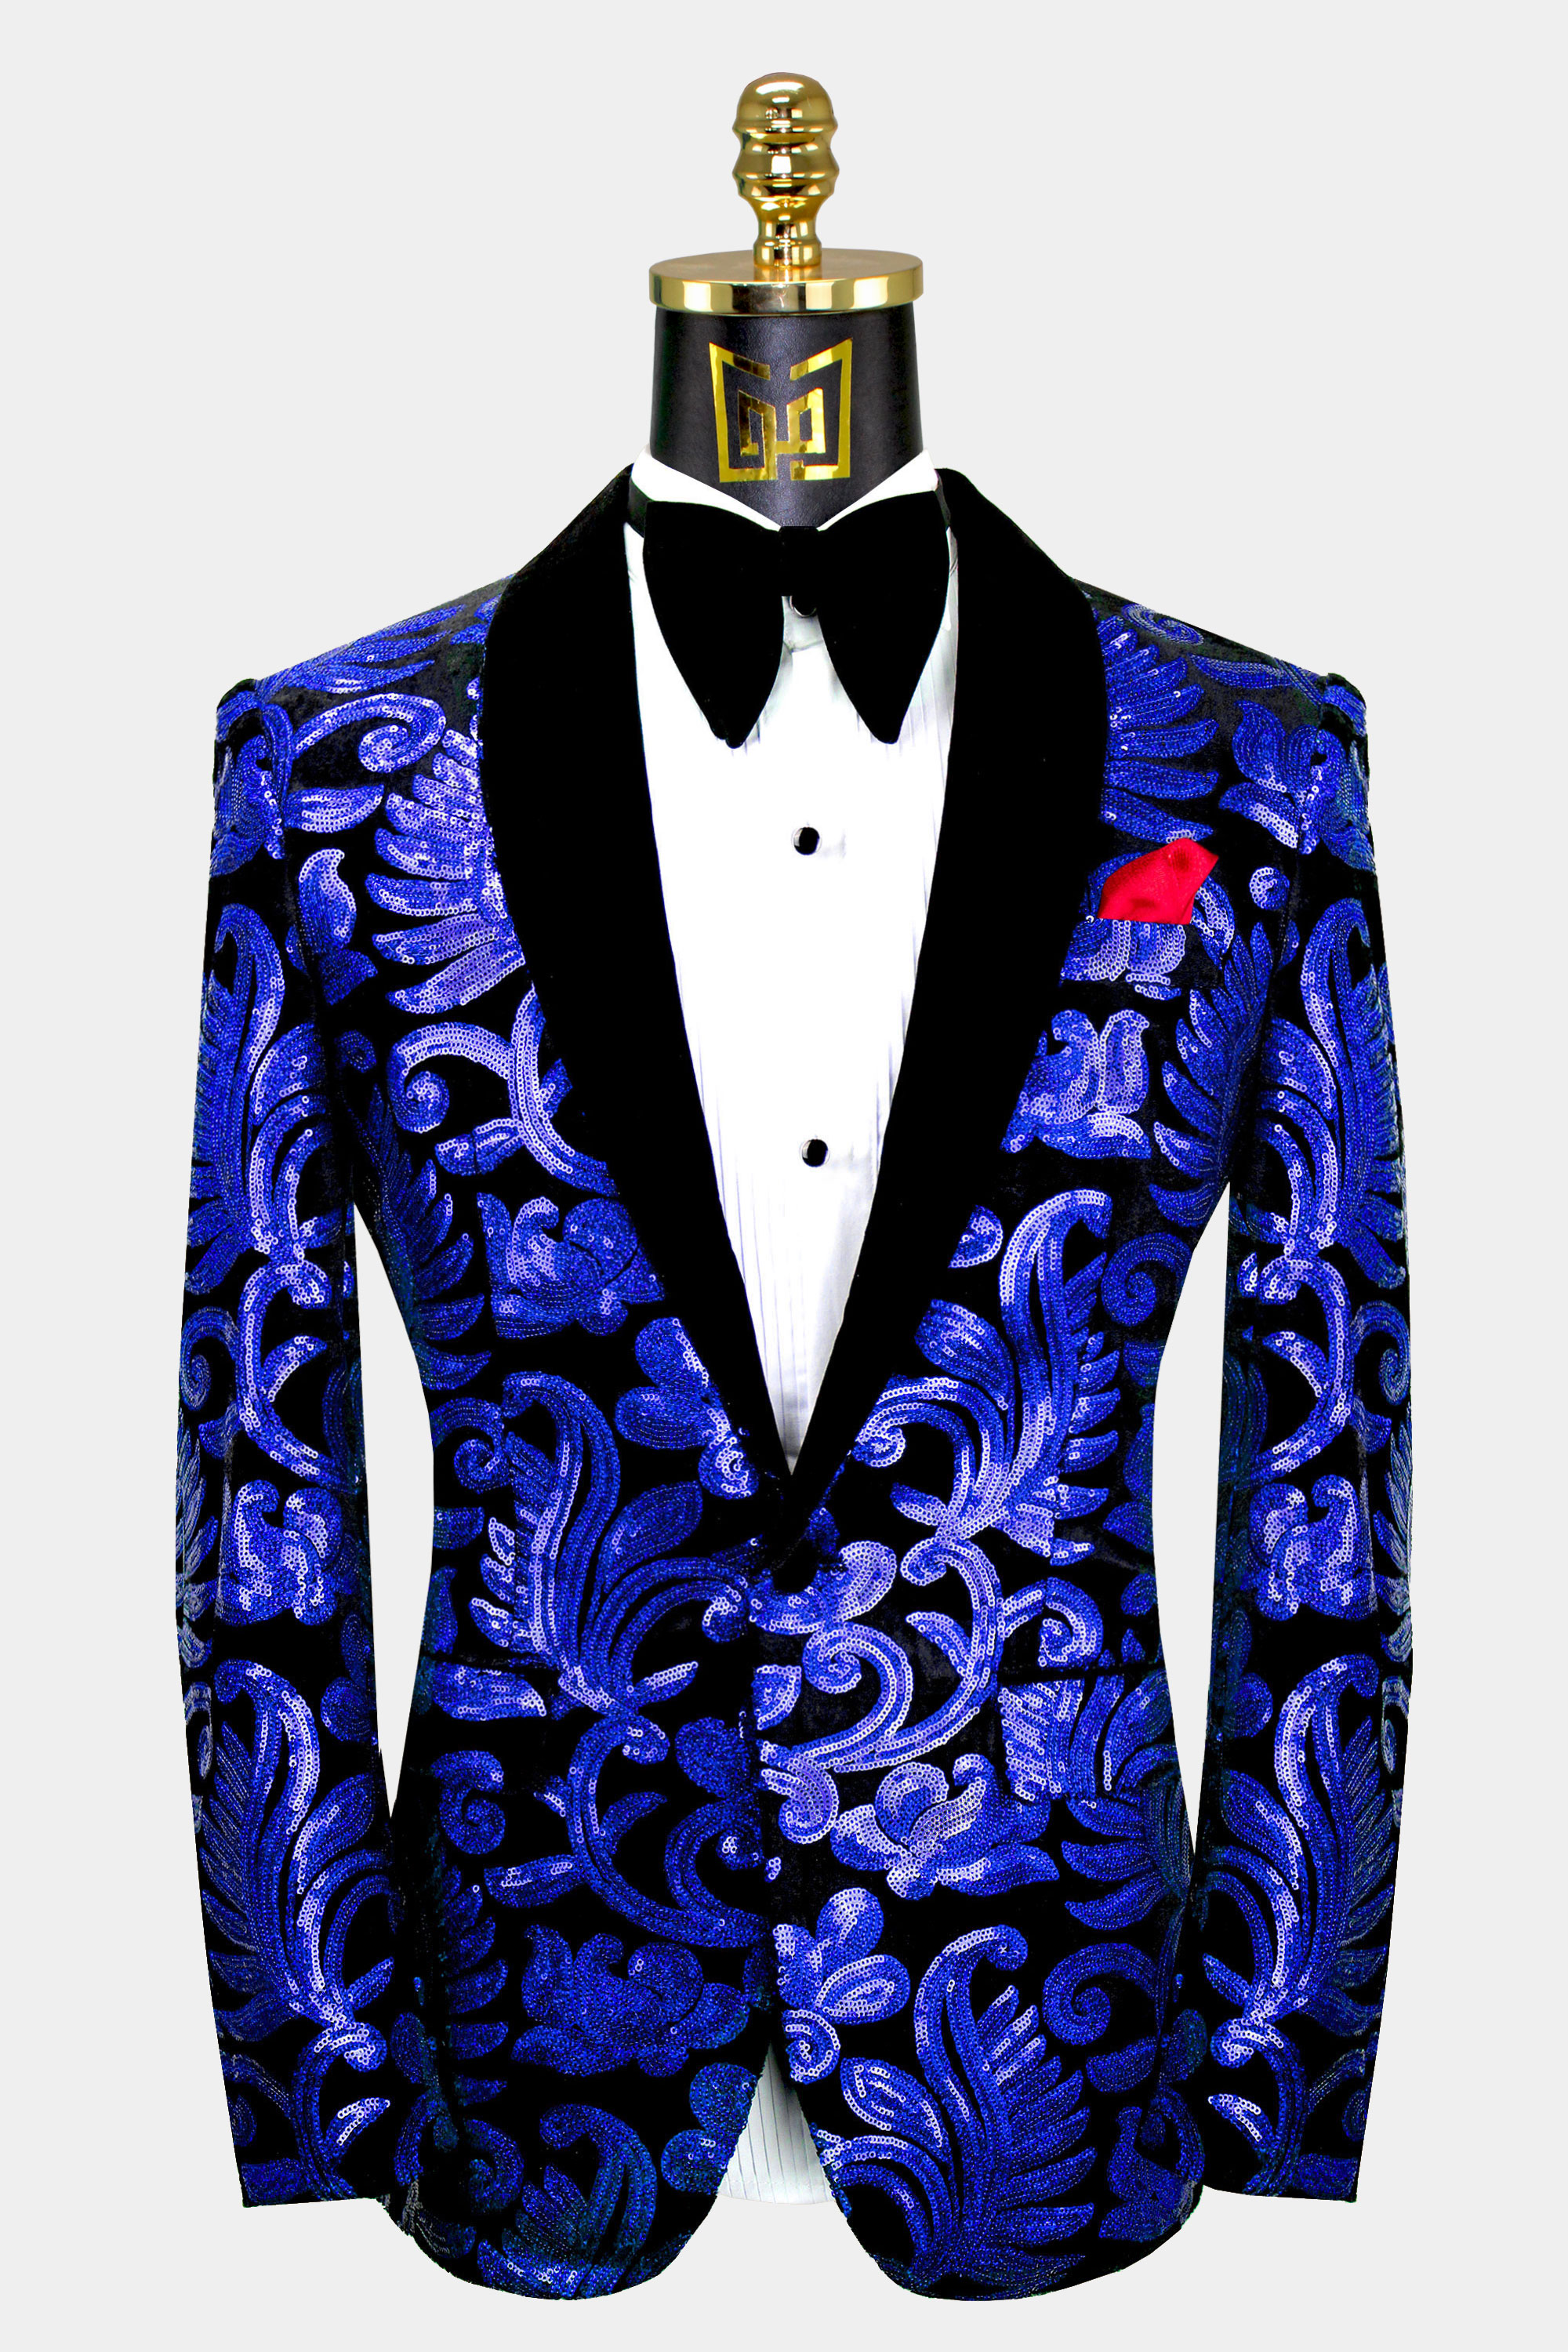 Mens-Royal-Blue-and-Black-Tuxedo-Jacket-Prom-Suit-Blazer-from-Gentlemansguru.com